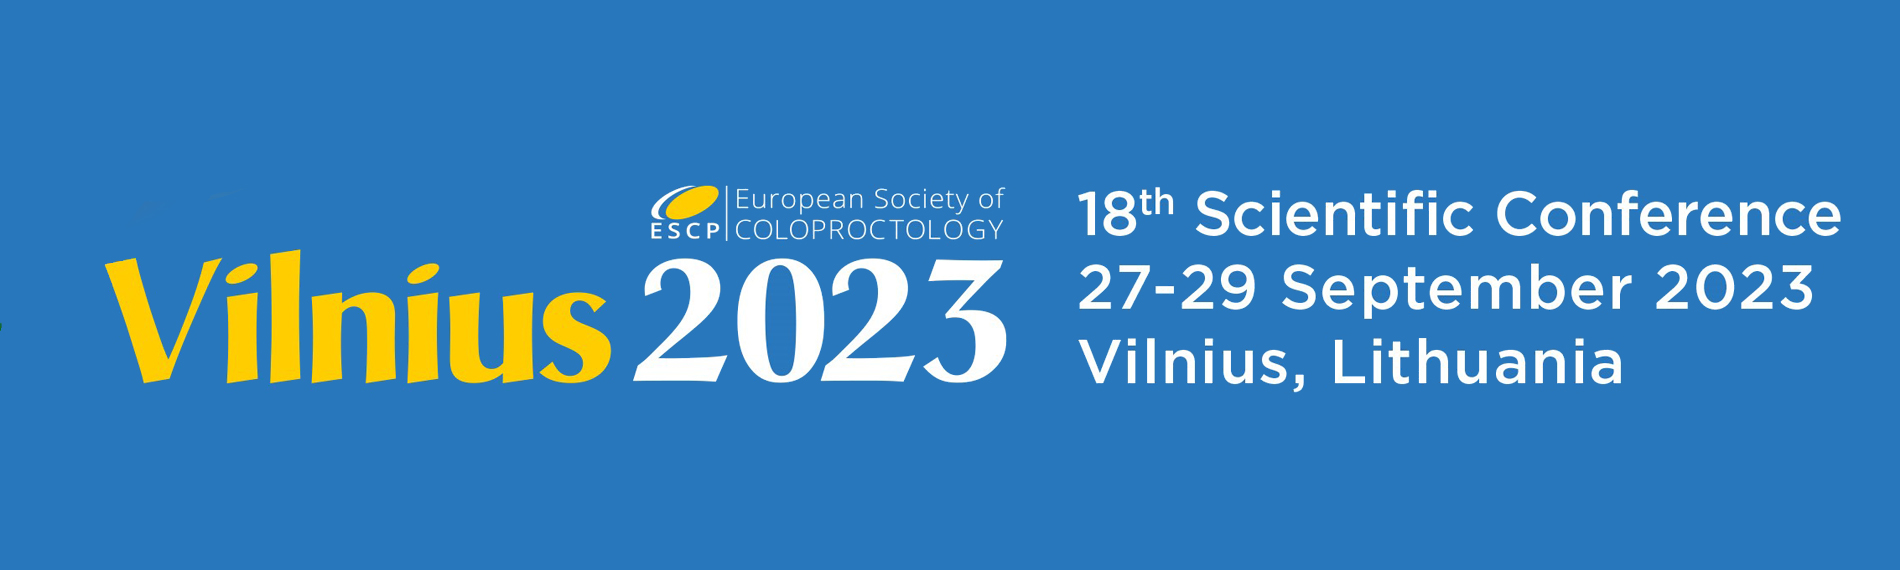 ESCP Meeting, 27-29 September 2023